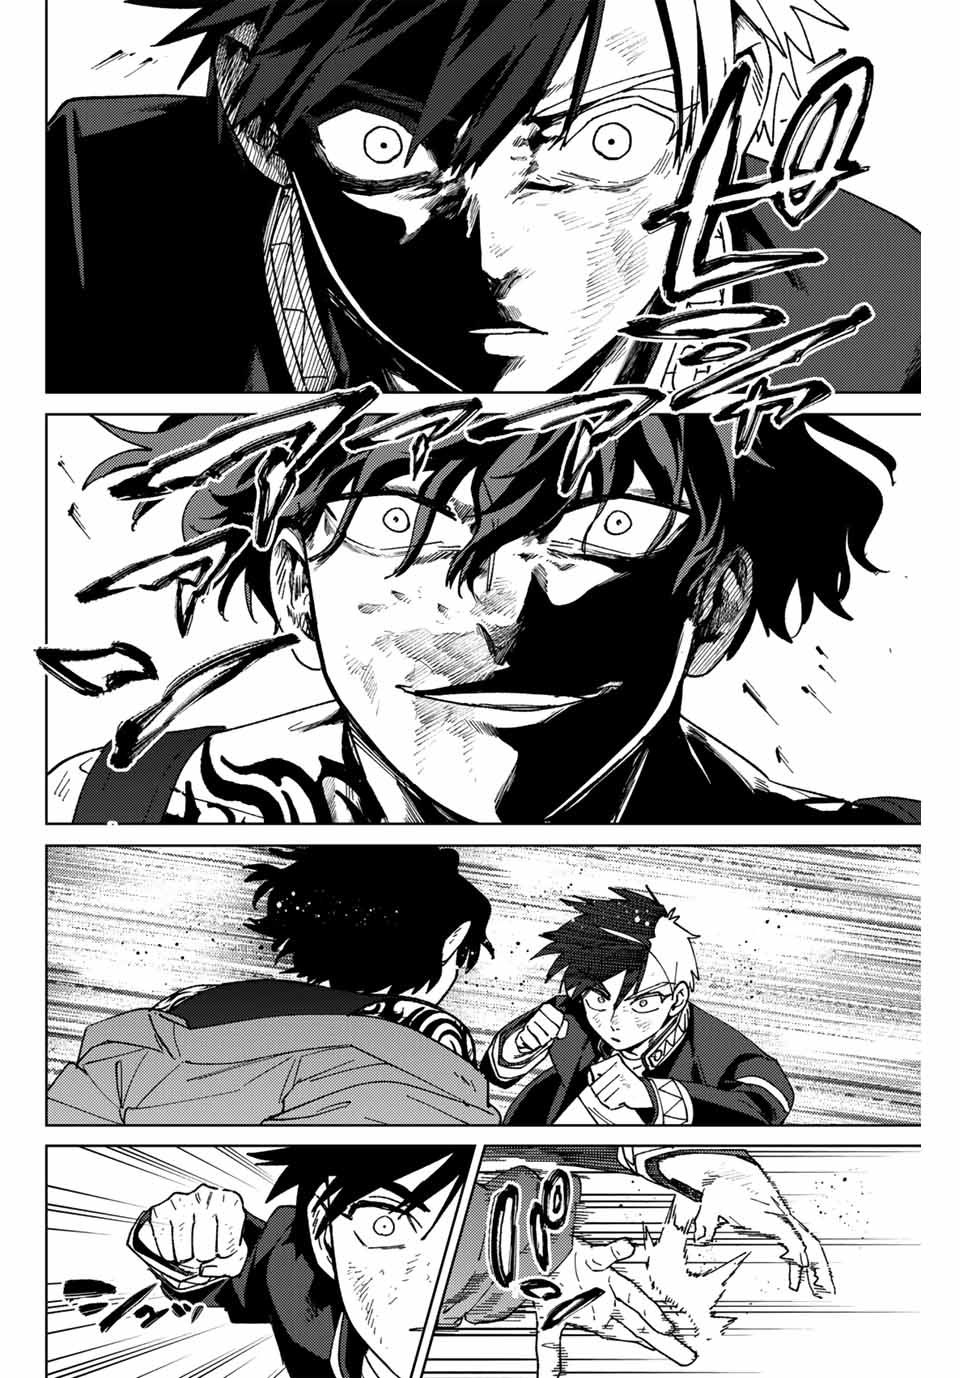 Wind Breaker (NII Satoru) - Chapter 139 - Page 16